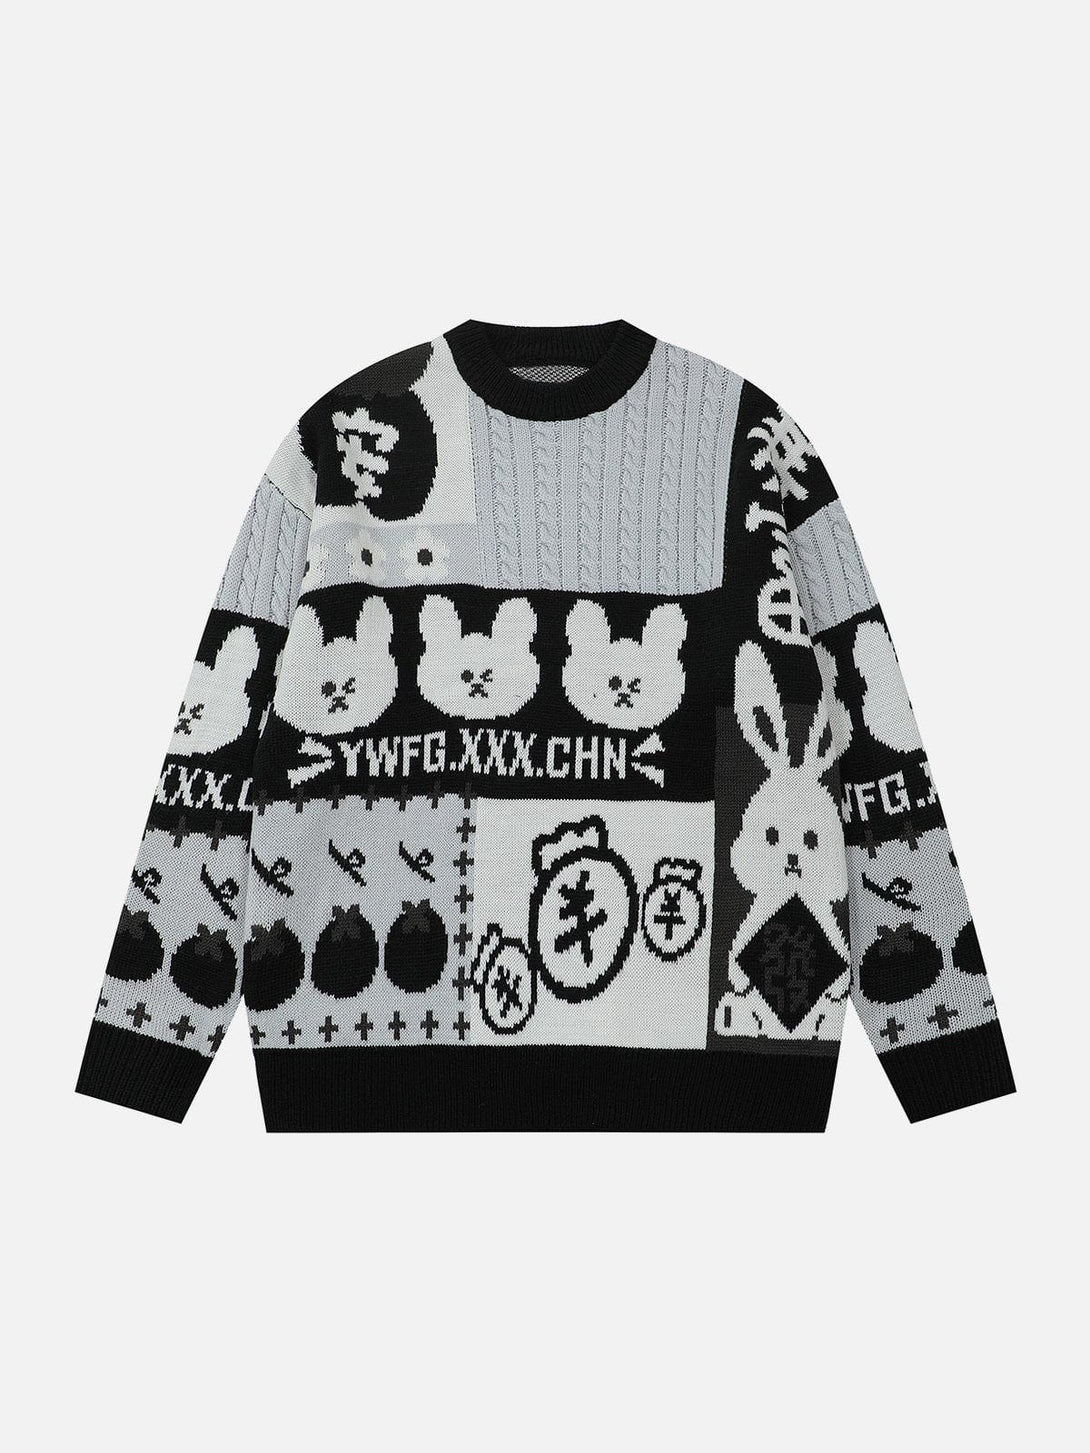 Levefly - Cartoon Embroidery Sweater - Streetwear Fashion - levefly.com